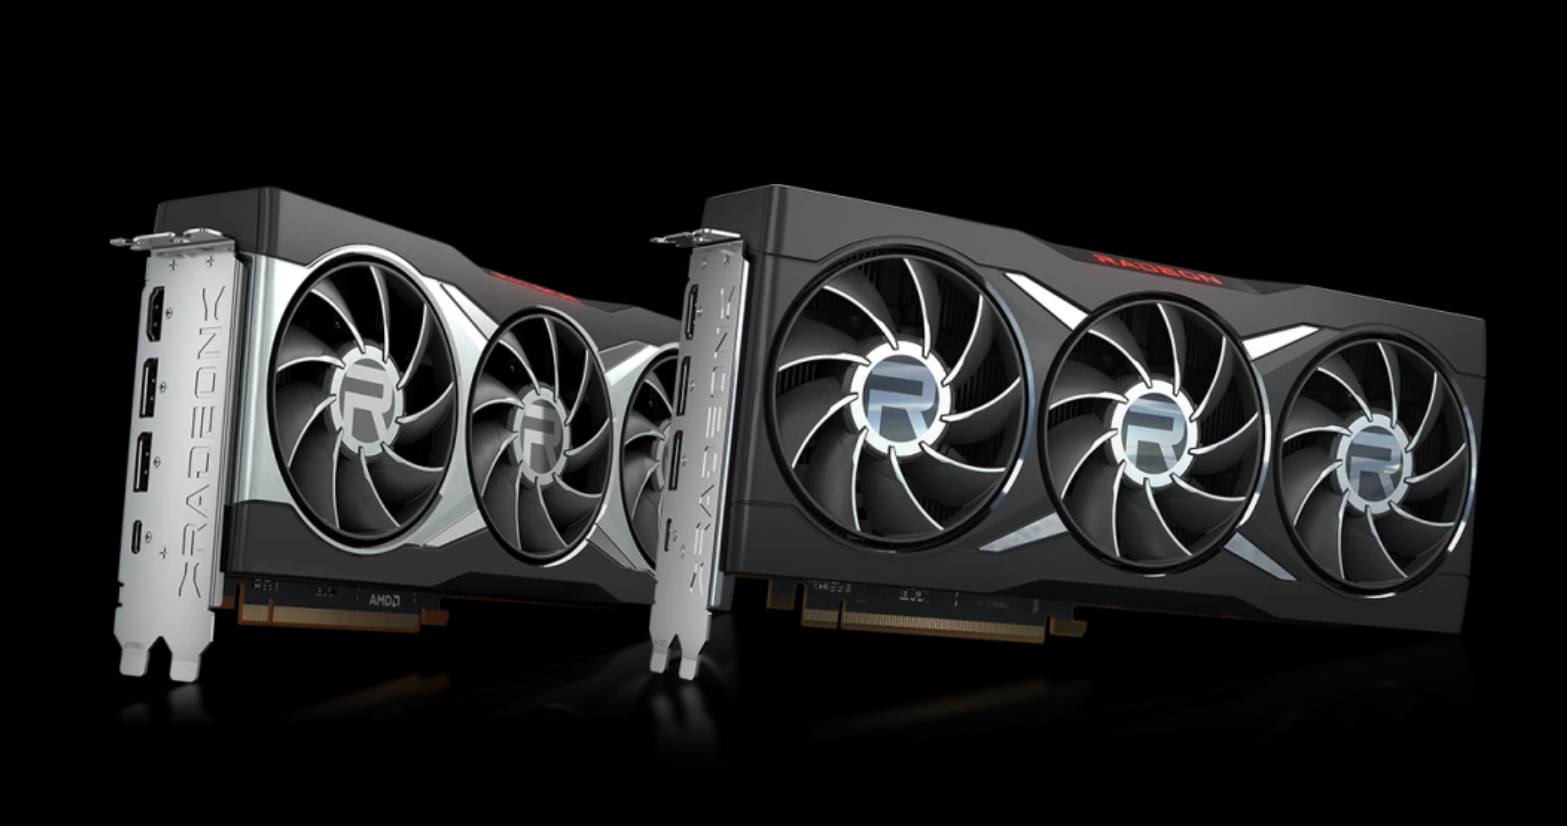 AMD is refreshing its RX 6000 desktop GPUs with higher clocks